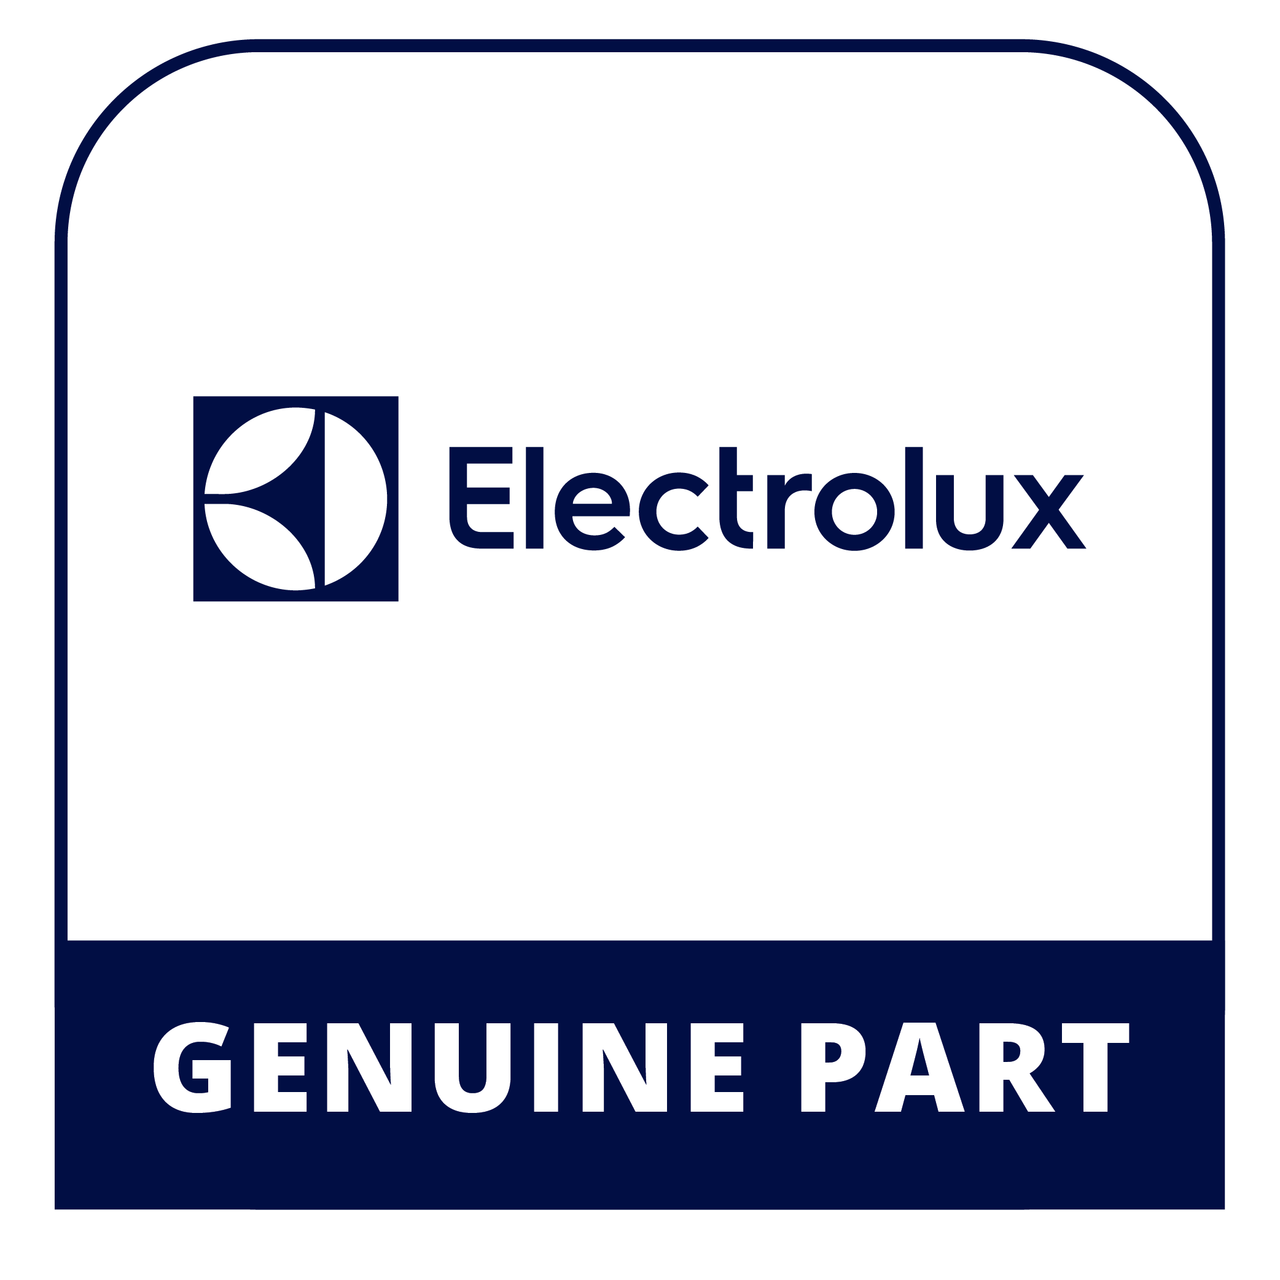 Frigidaire - Electrolux 316566901 Sleeve - Genuine Electrolux Part